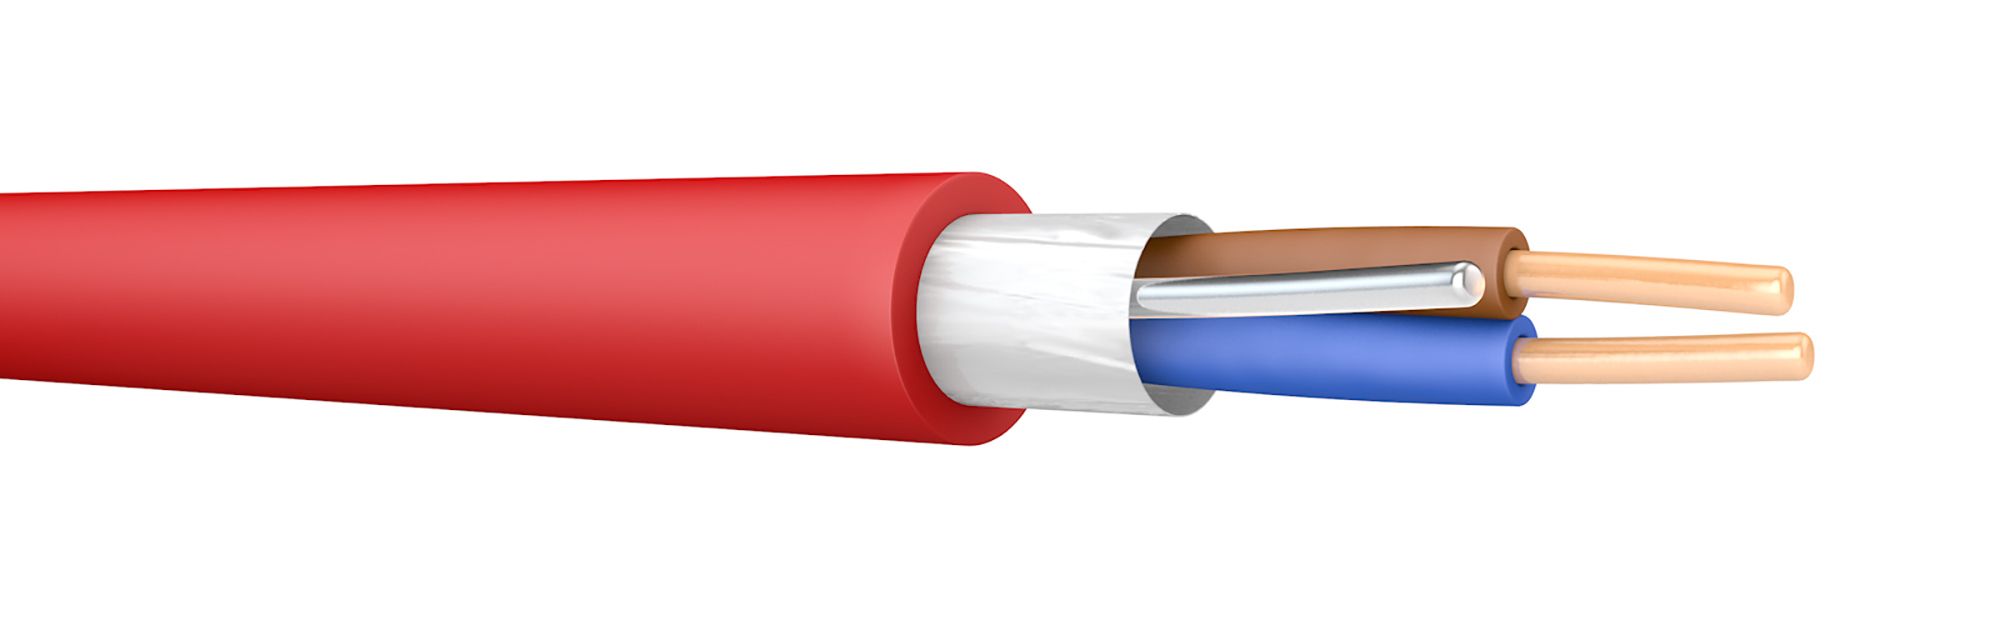 Prysmian FP200 Red 2 core Fire resistant cable, 1.5mm² x 50m